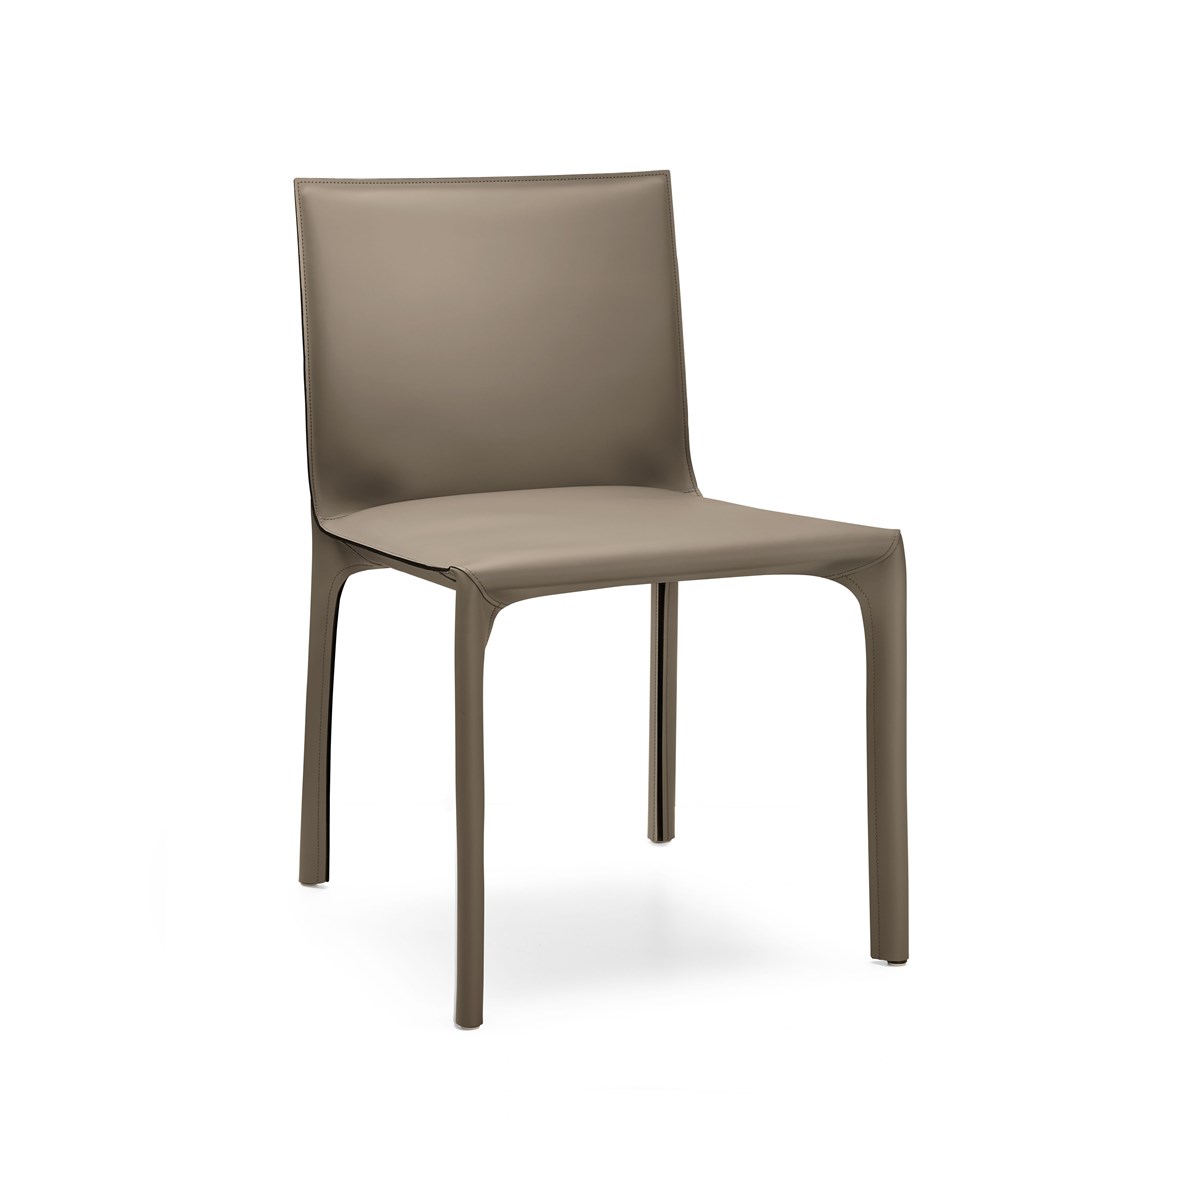 This01 WK Saddle Chair 0007 Tif D59a4366cf